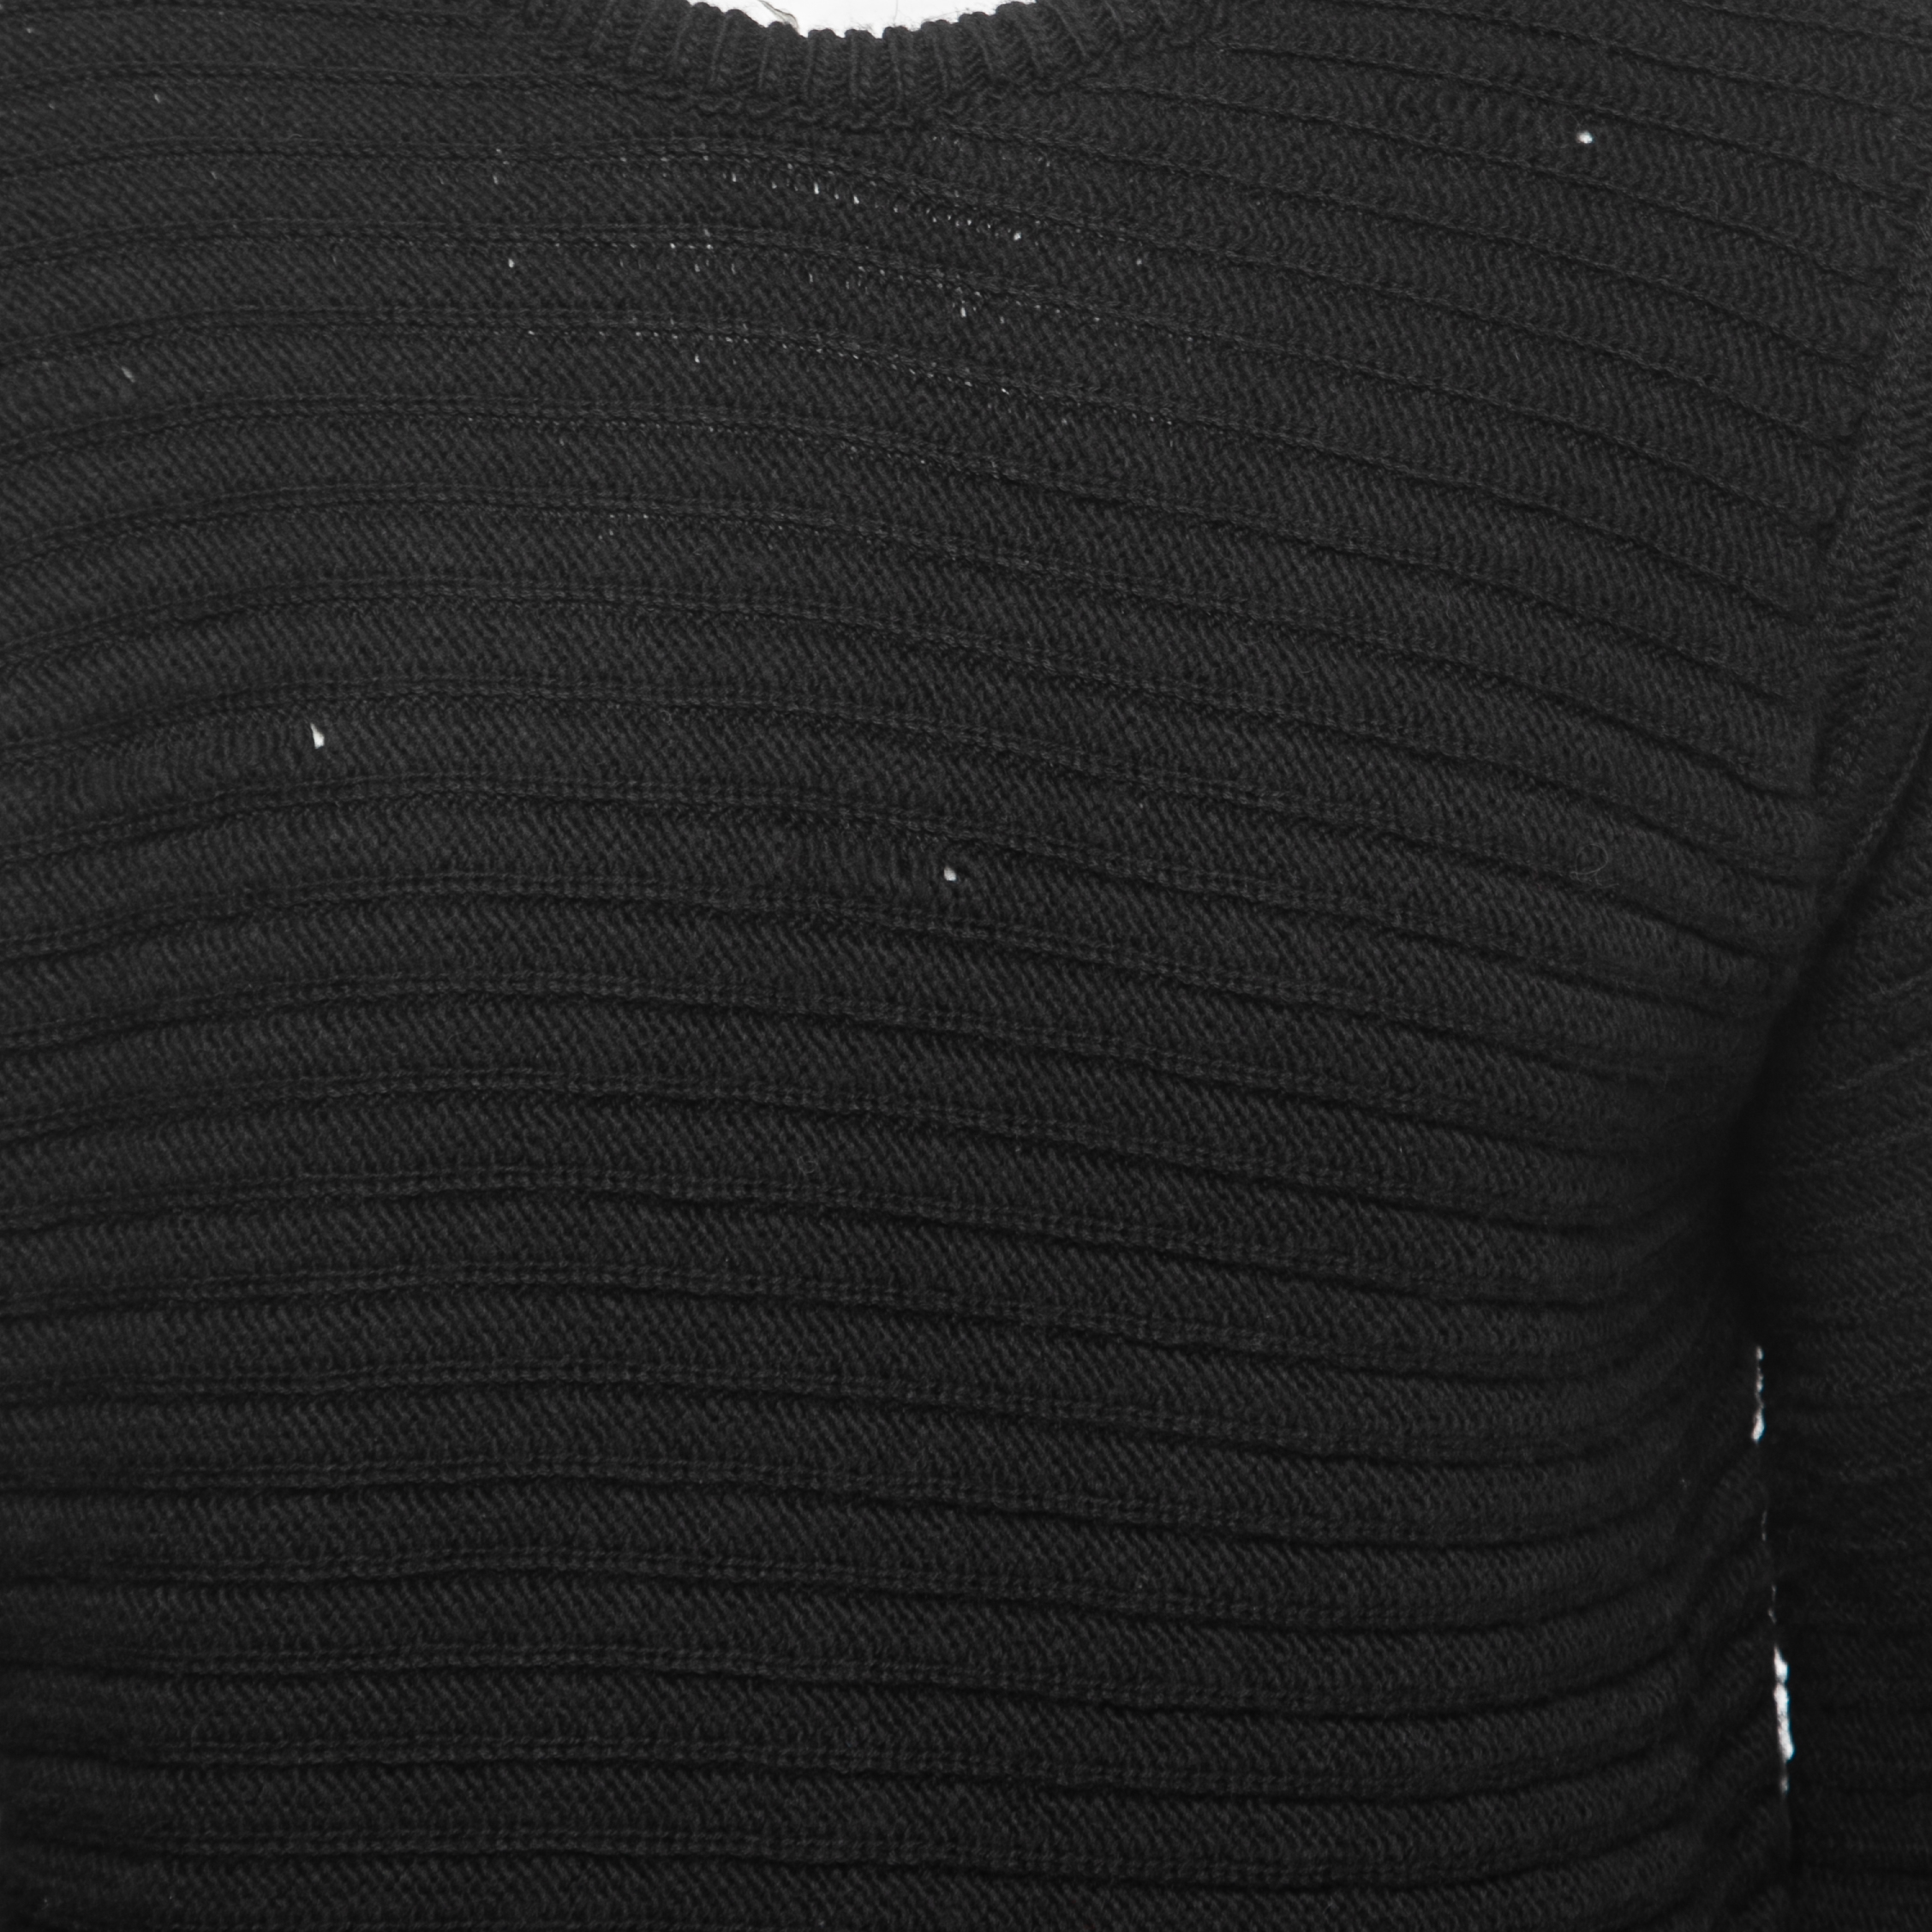 Zadig & Voltaire Black Distressed Merino Wool Jeremy Raye Sweater L